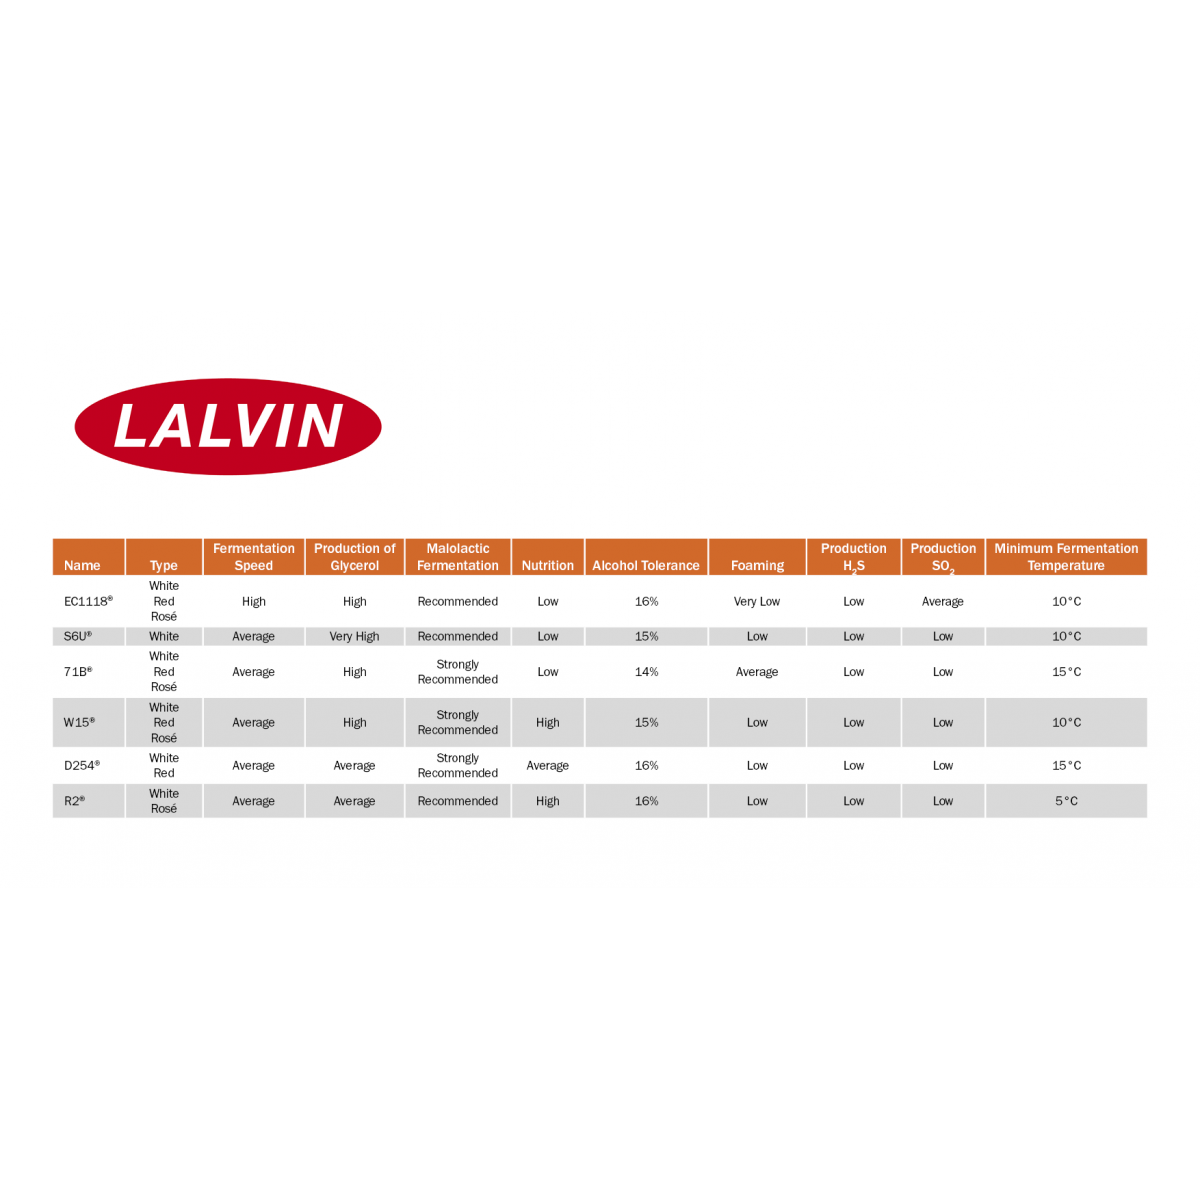 Levure sèche 71B™ - Lalvin™ - 500 g